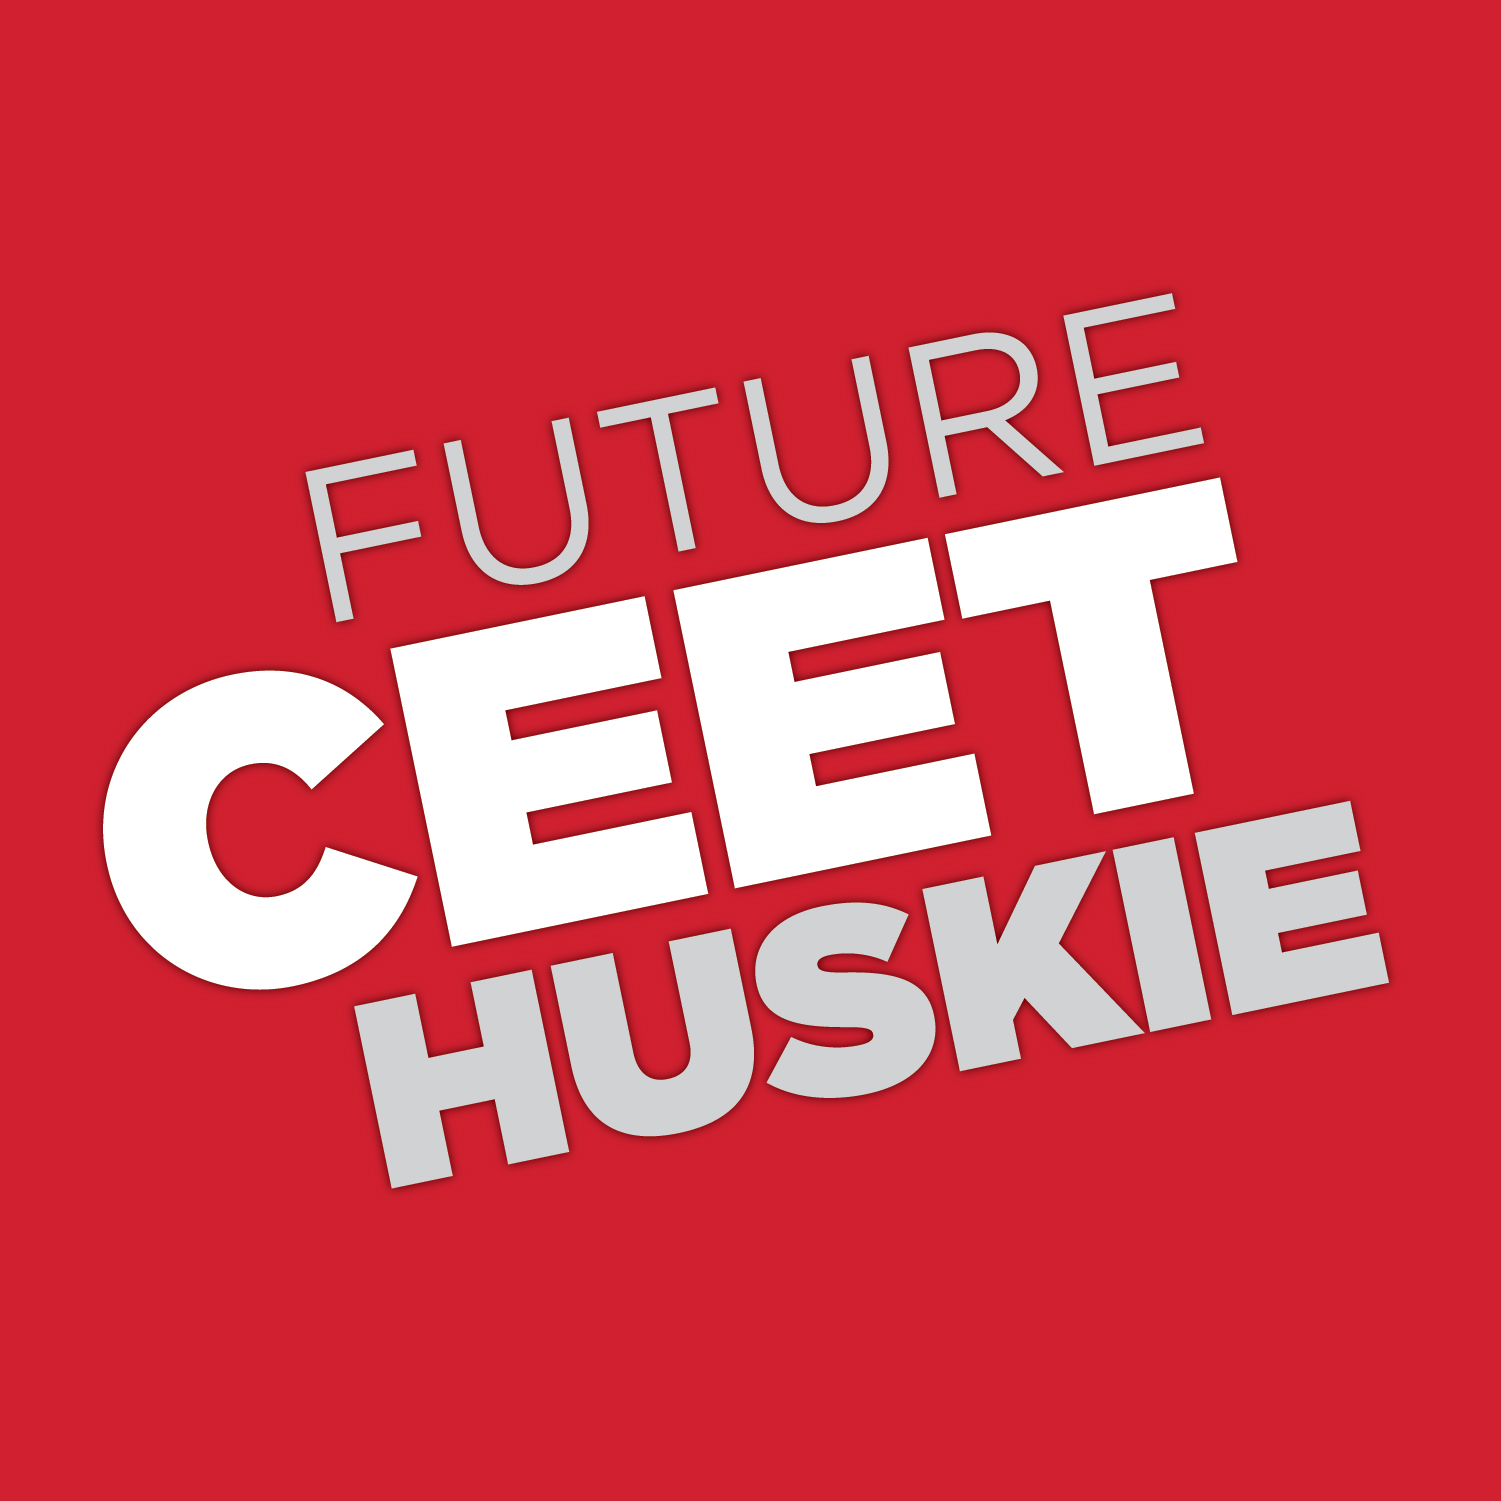 Future CEET Huskie - Red for Profile